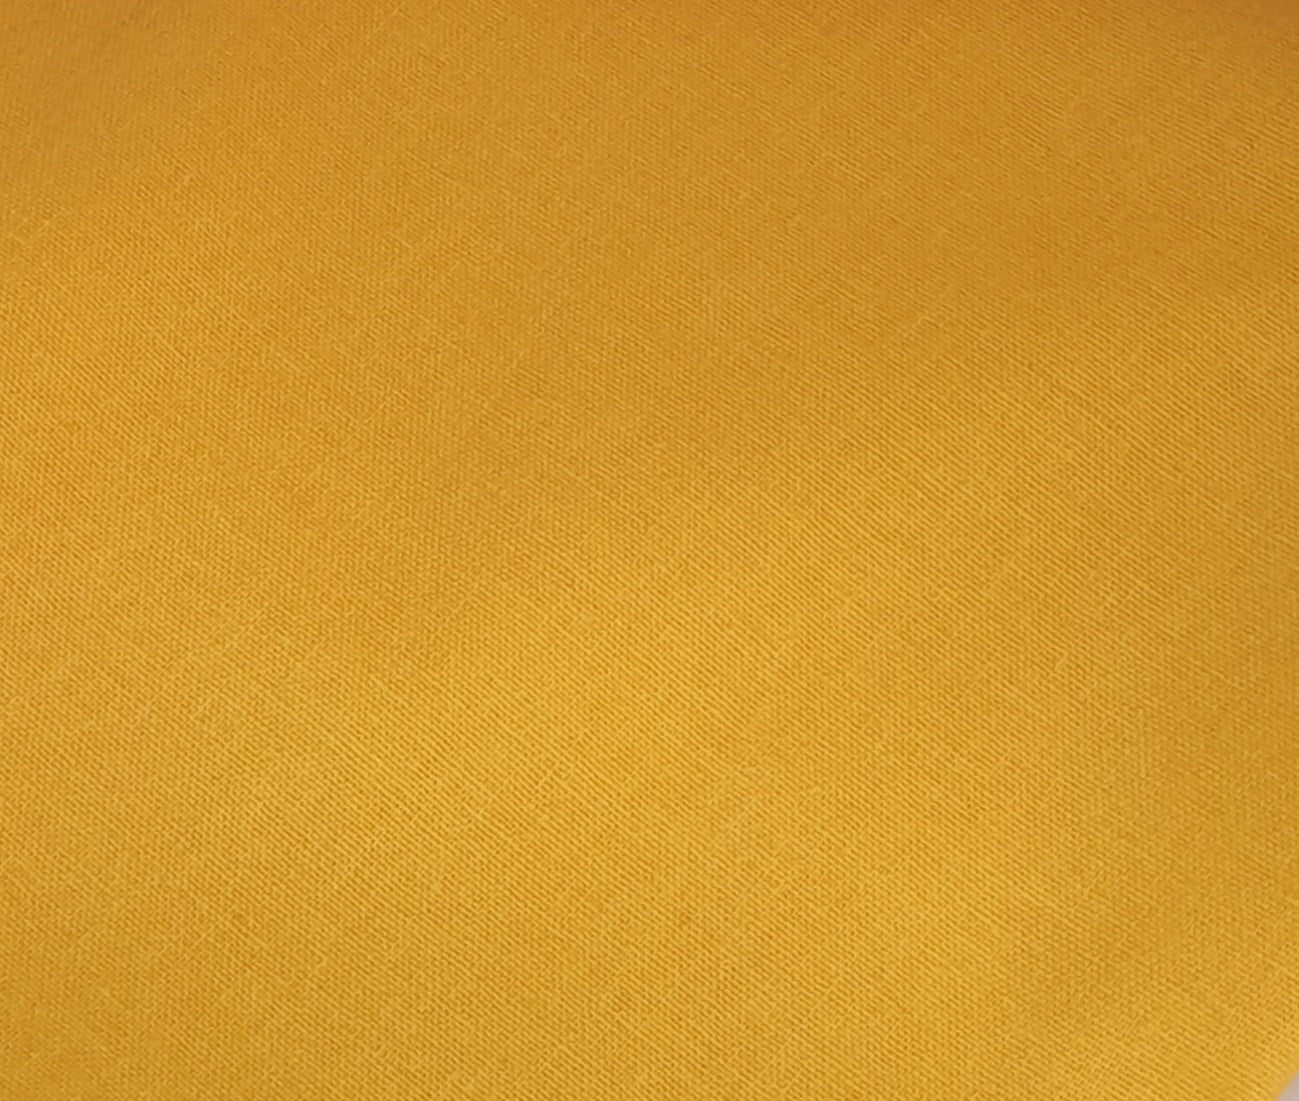 Sunshine yellow craft cotton